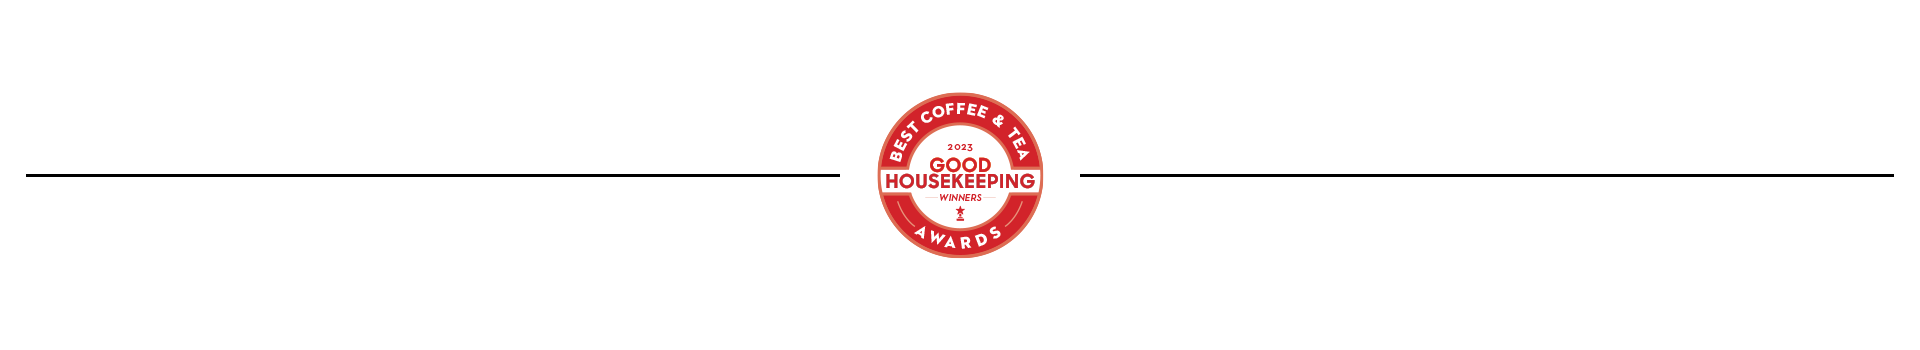 coffee awards logo